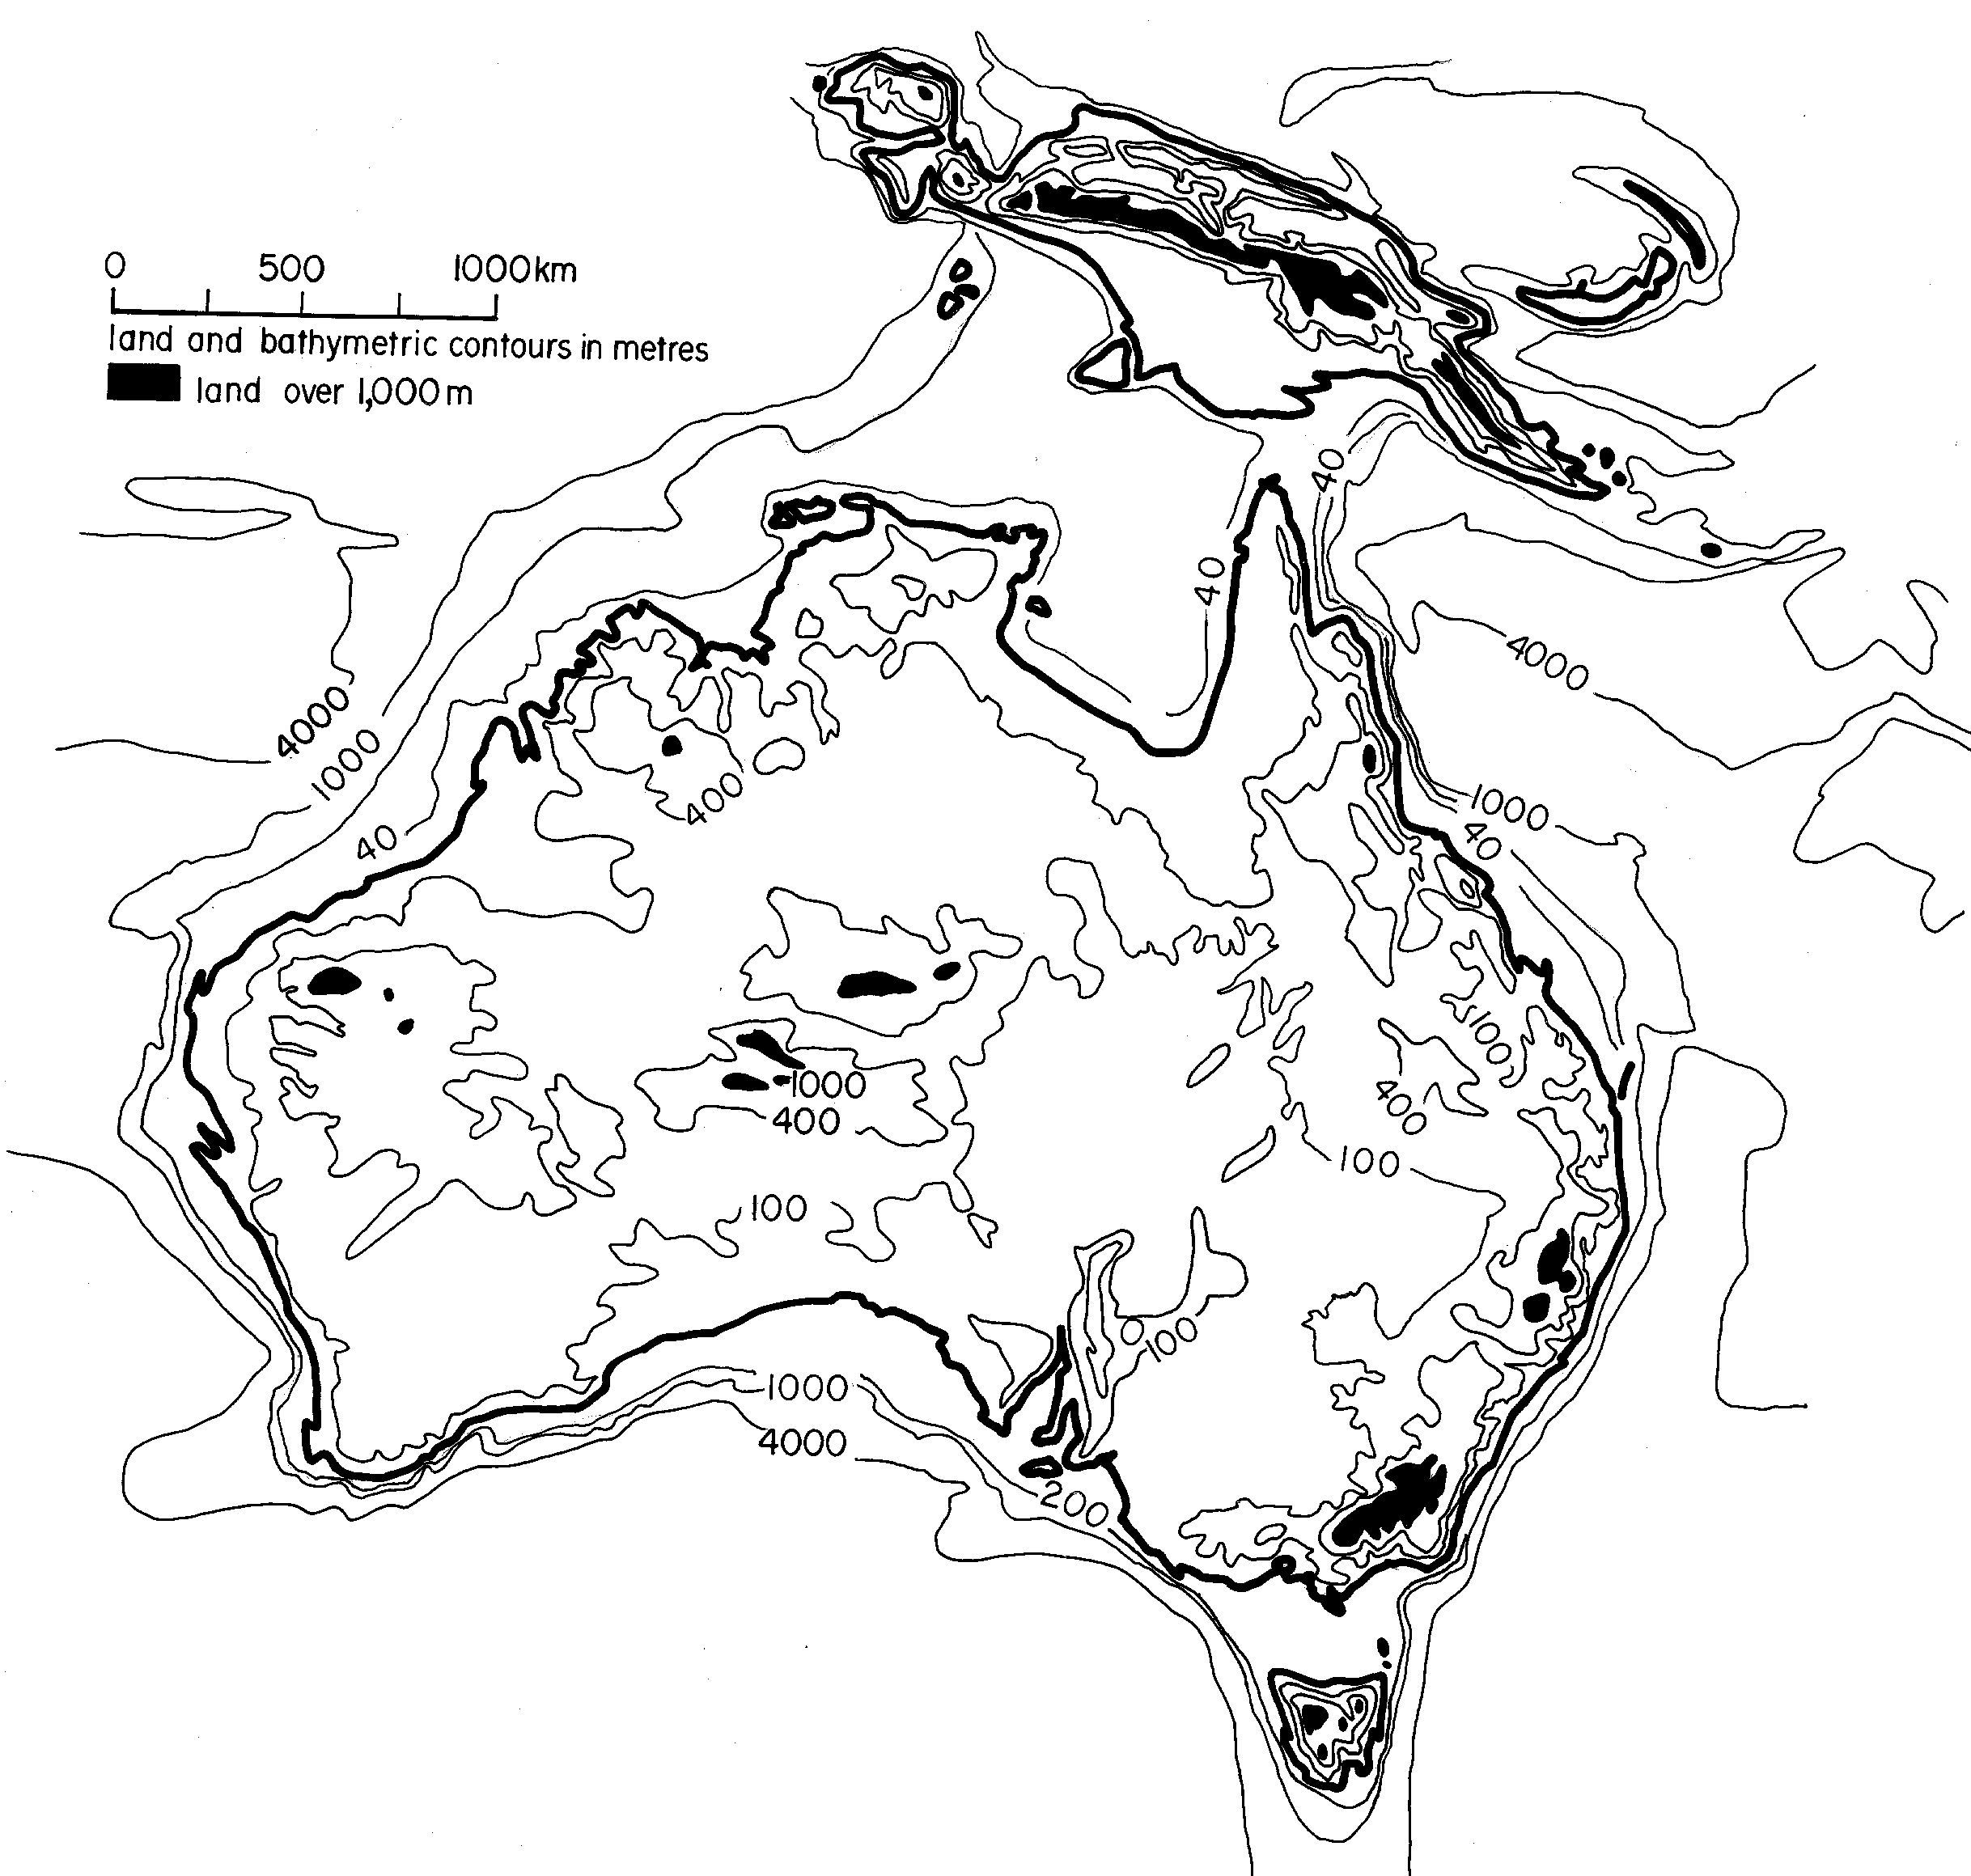 tasmania topography